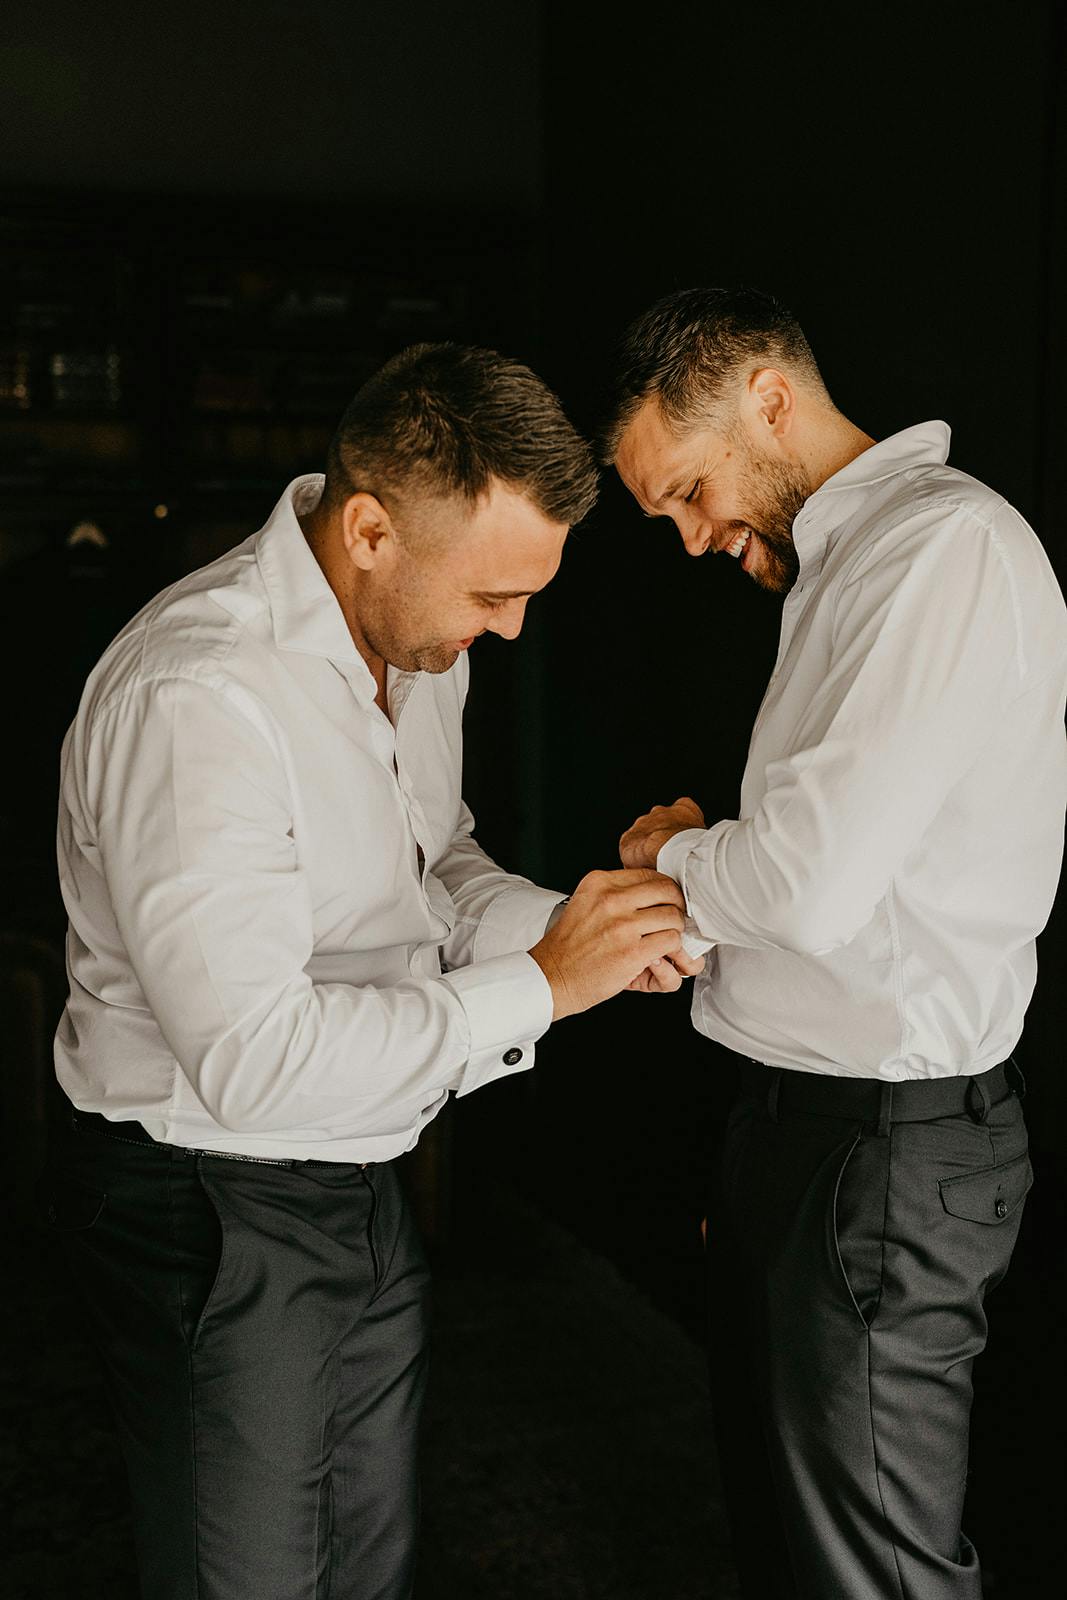 Groomsman helping groom with cufflinks